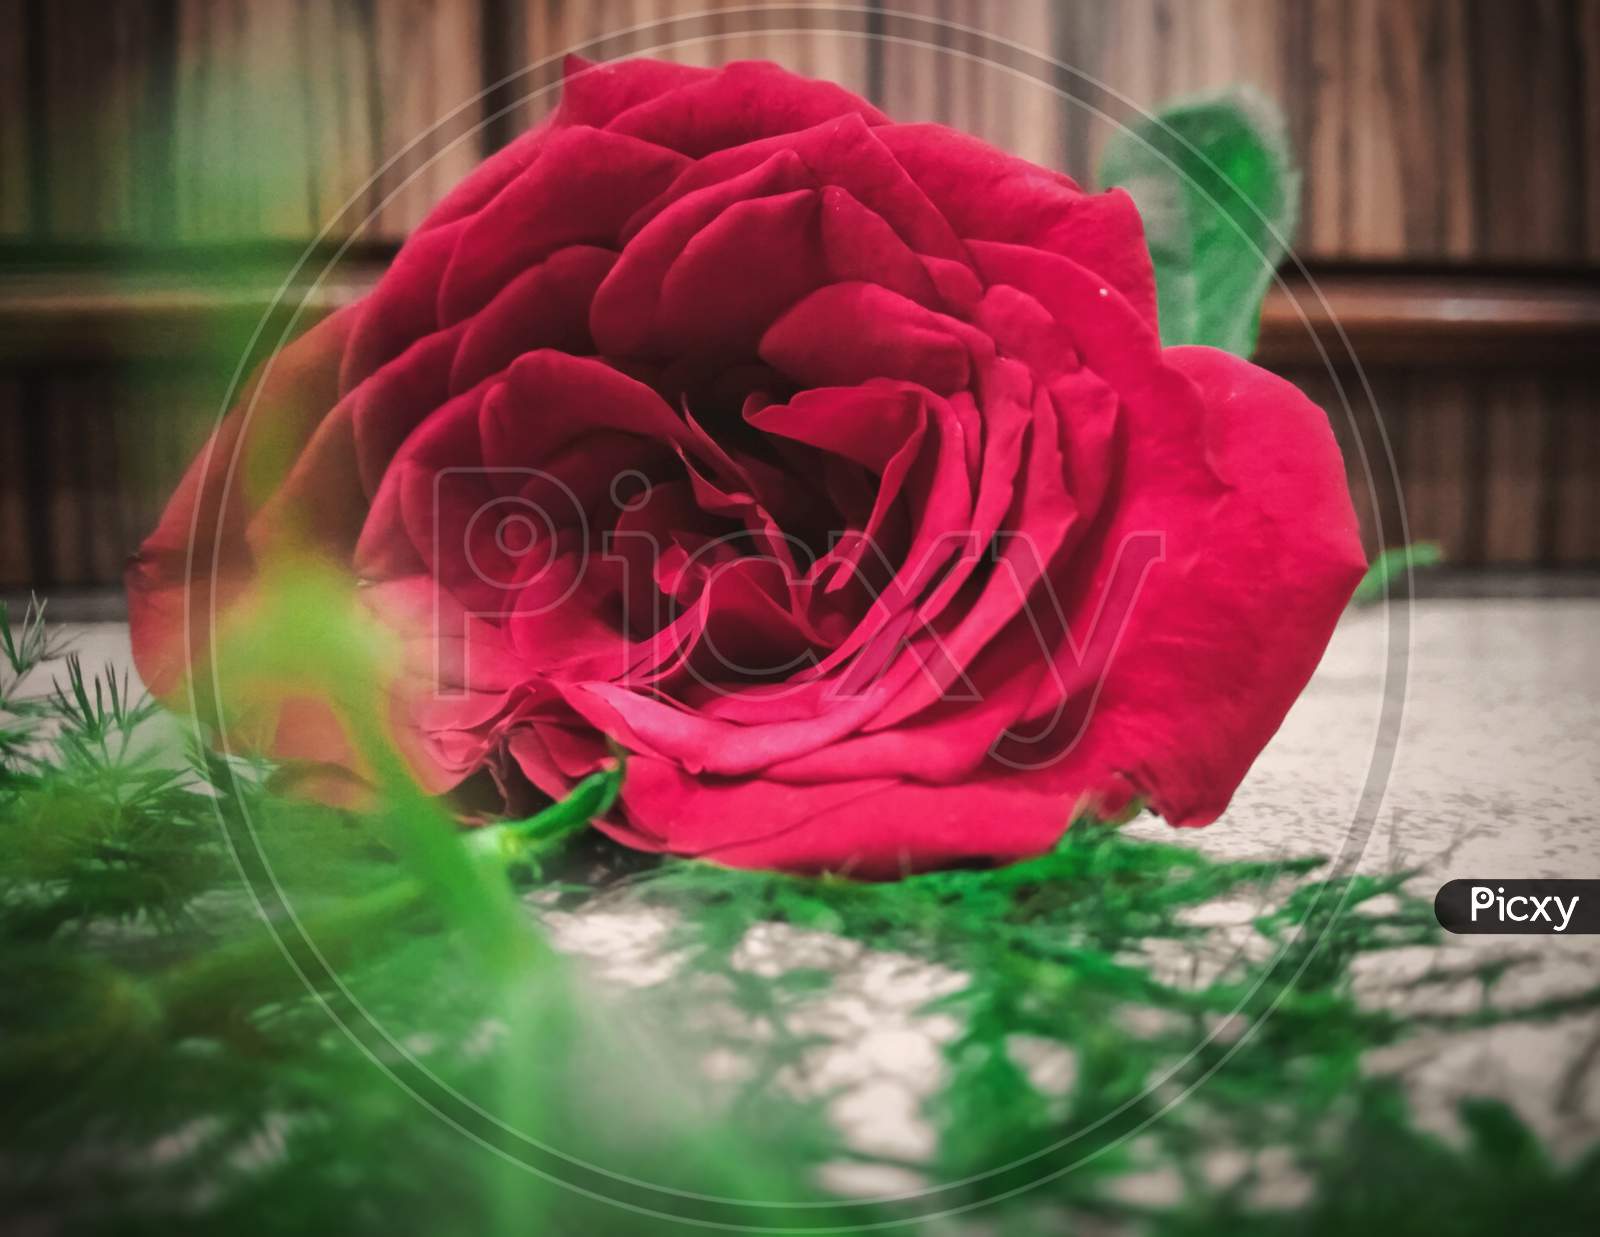 A single rose close-up photo